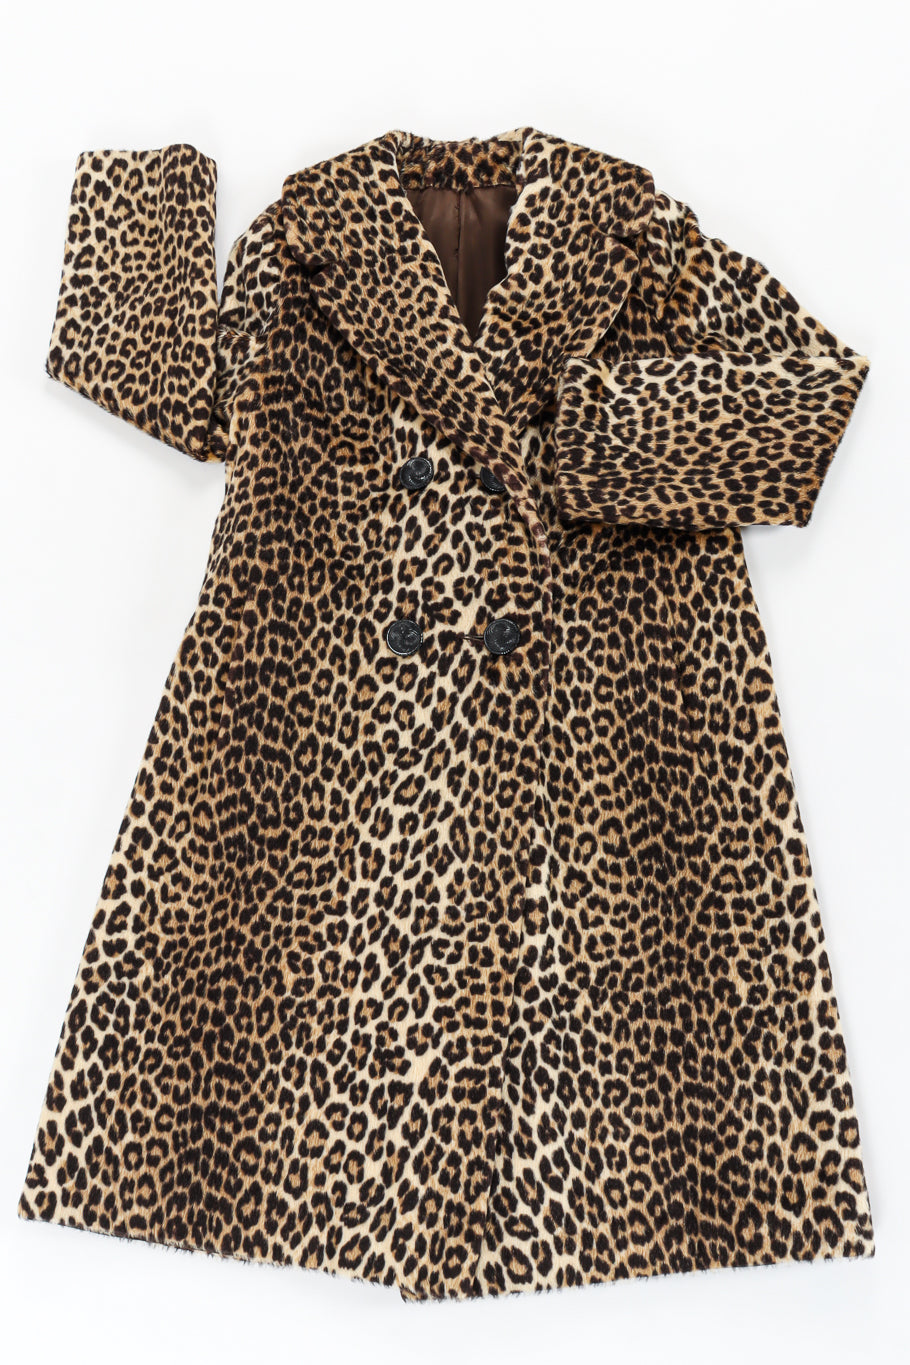 Vintage Carol Brent Double Breasted Leopard Faux Fur Coat front flat lay @ Recess LA